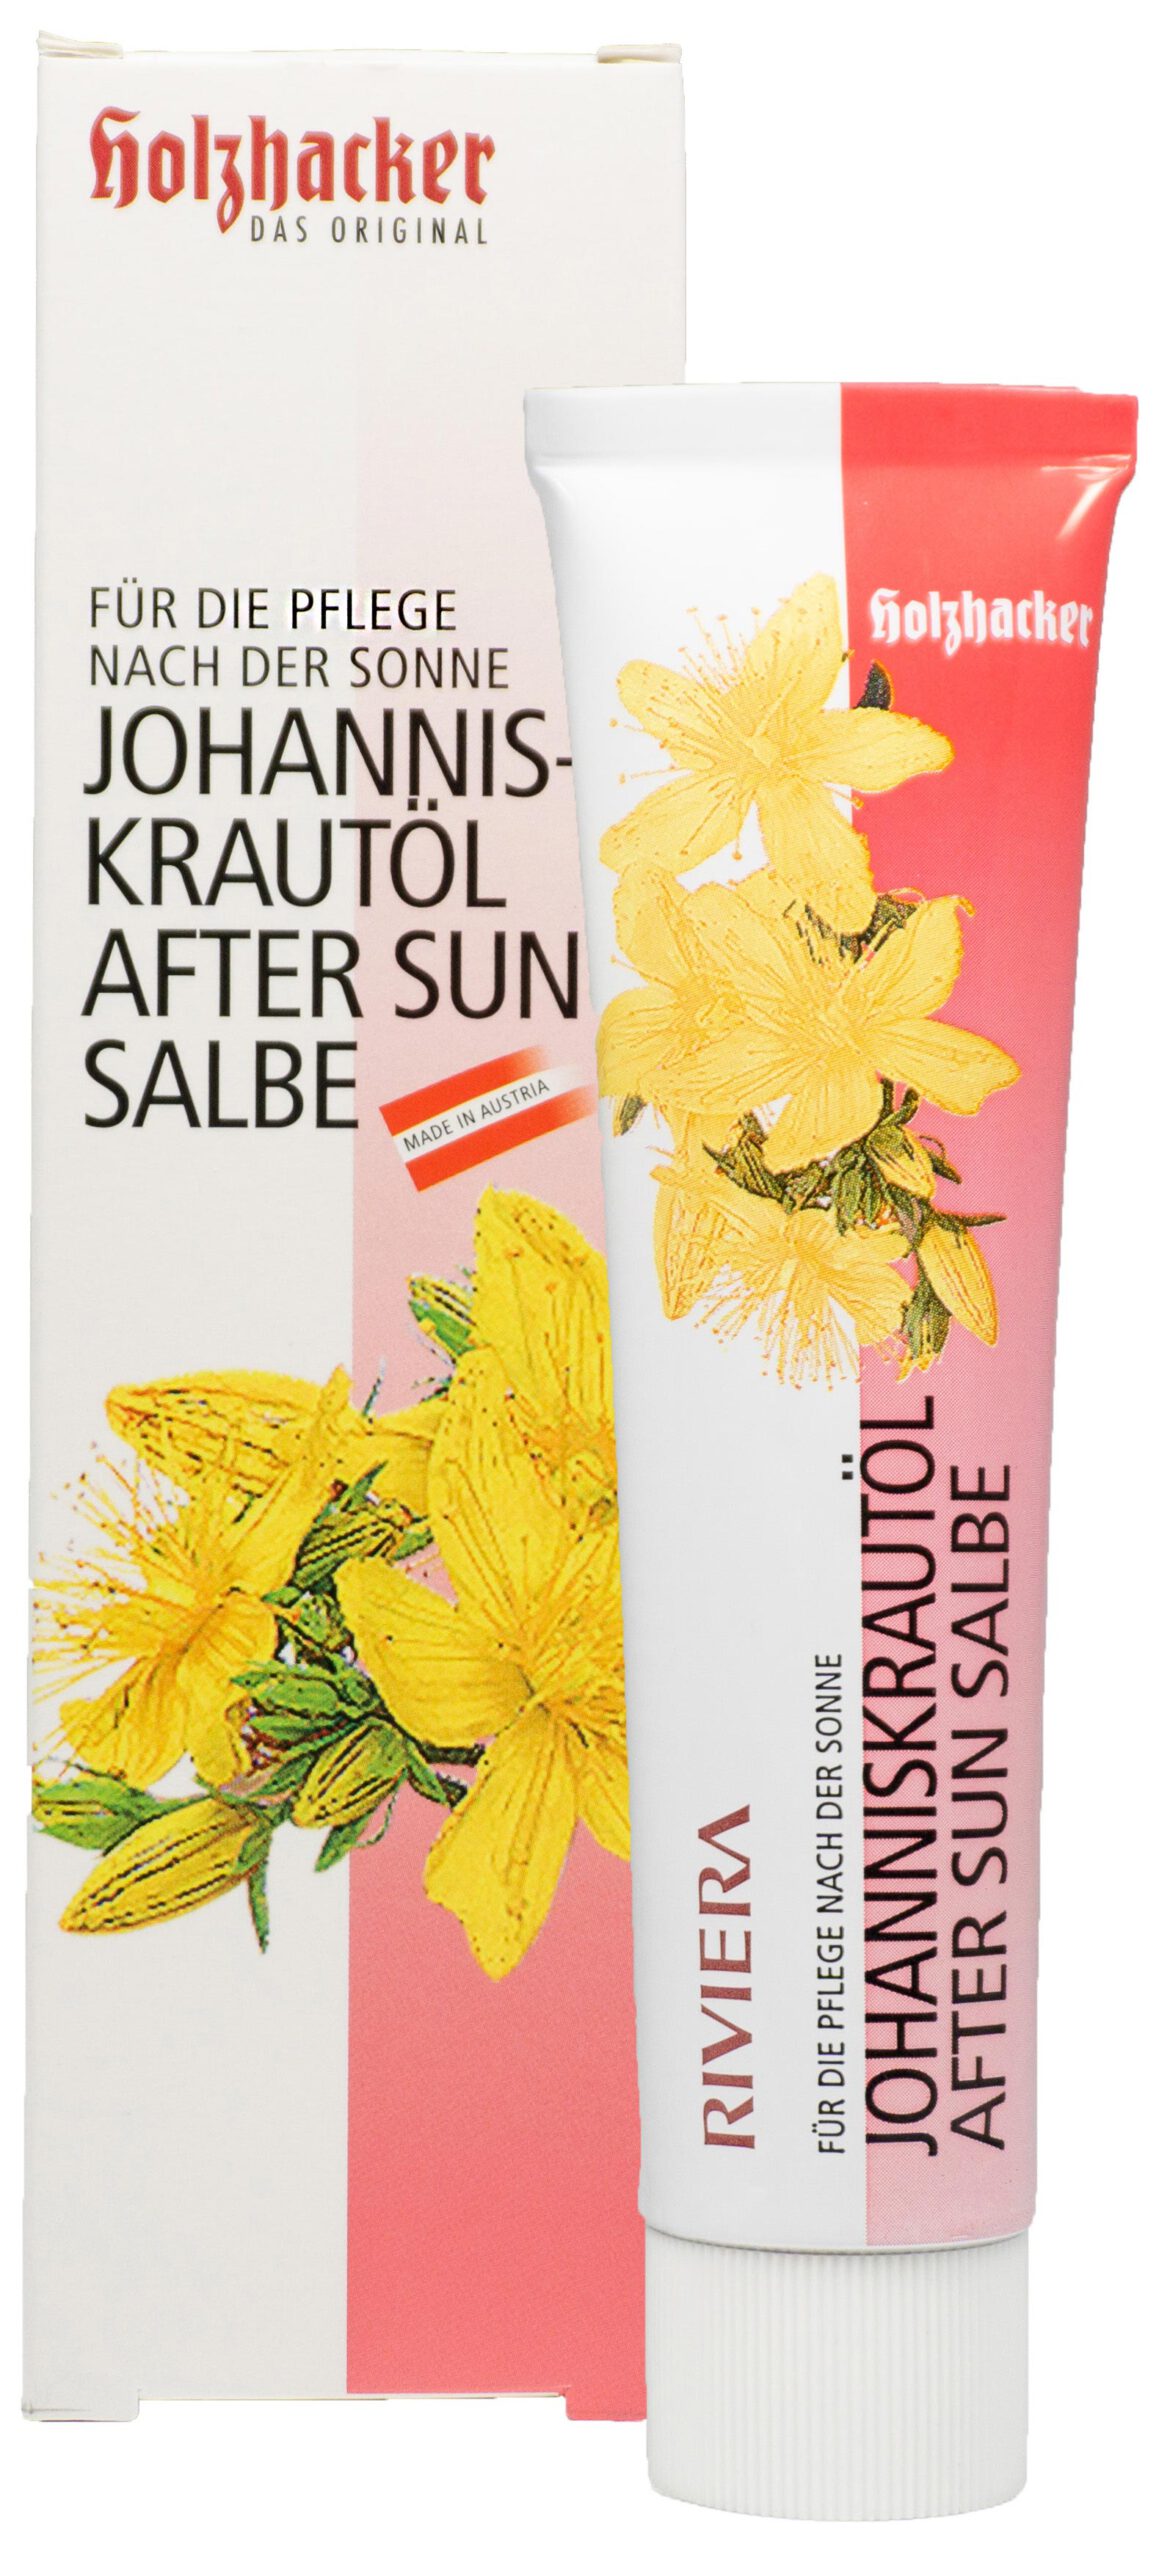 Johanniskrautöl After Sun Salbe Image